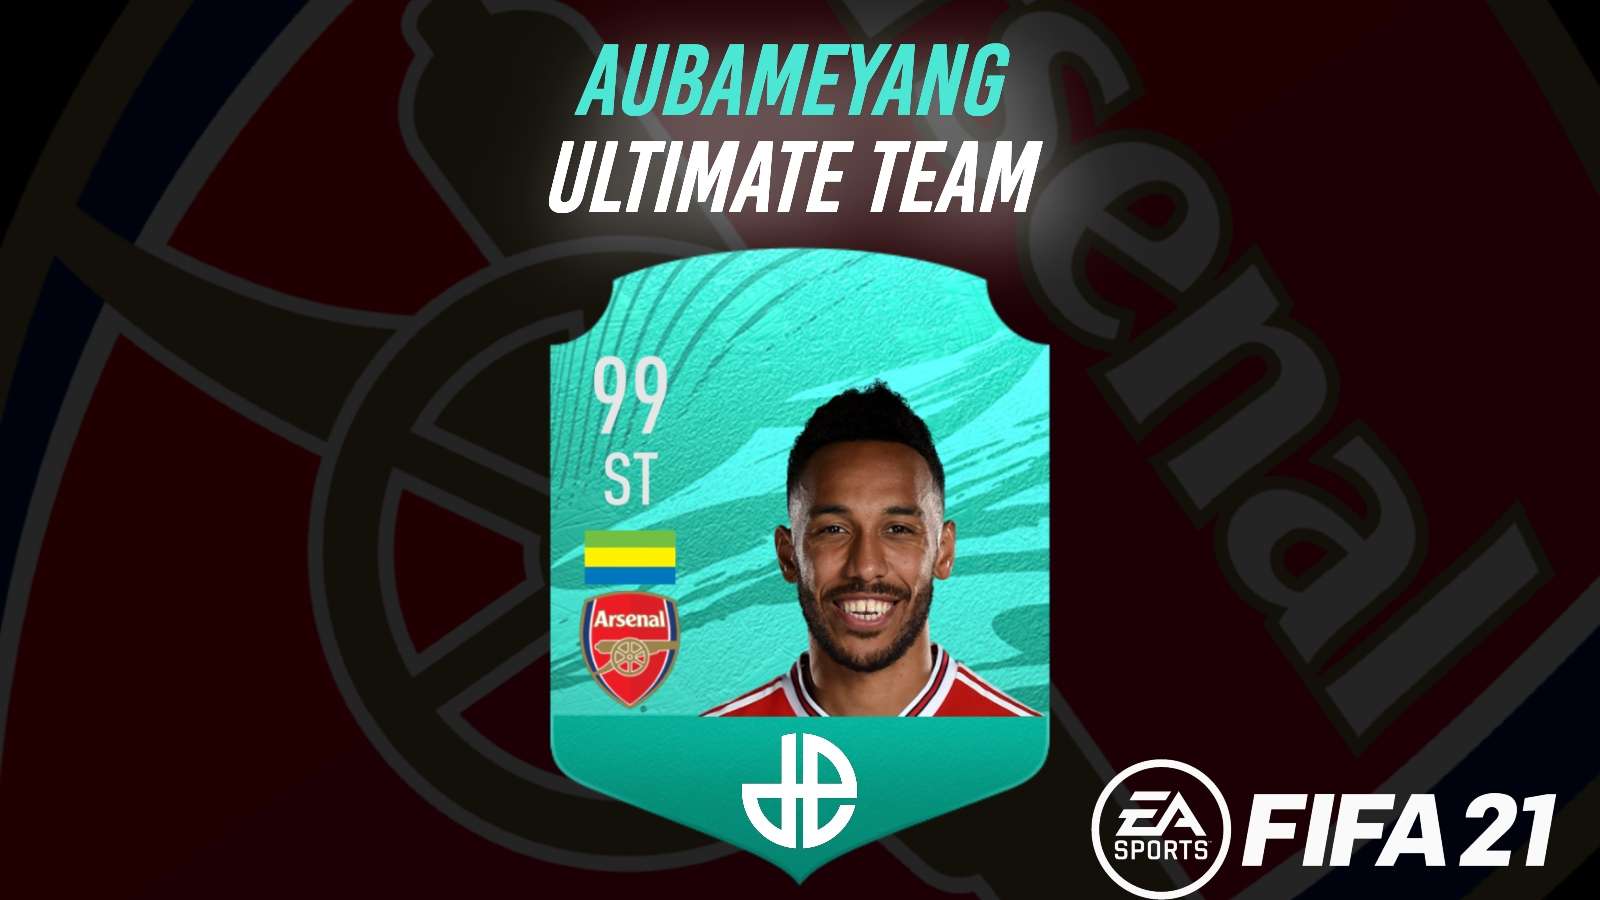 Aubameyang FIFA 21 Ultimate Team pro card